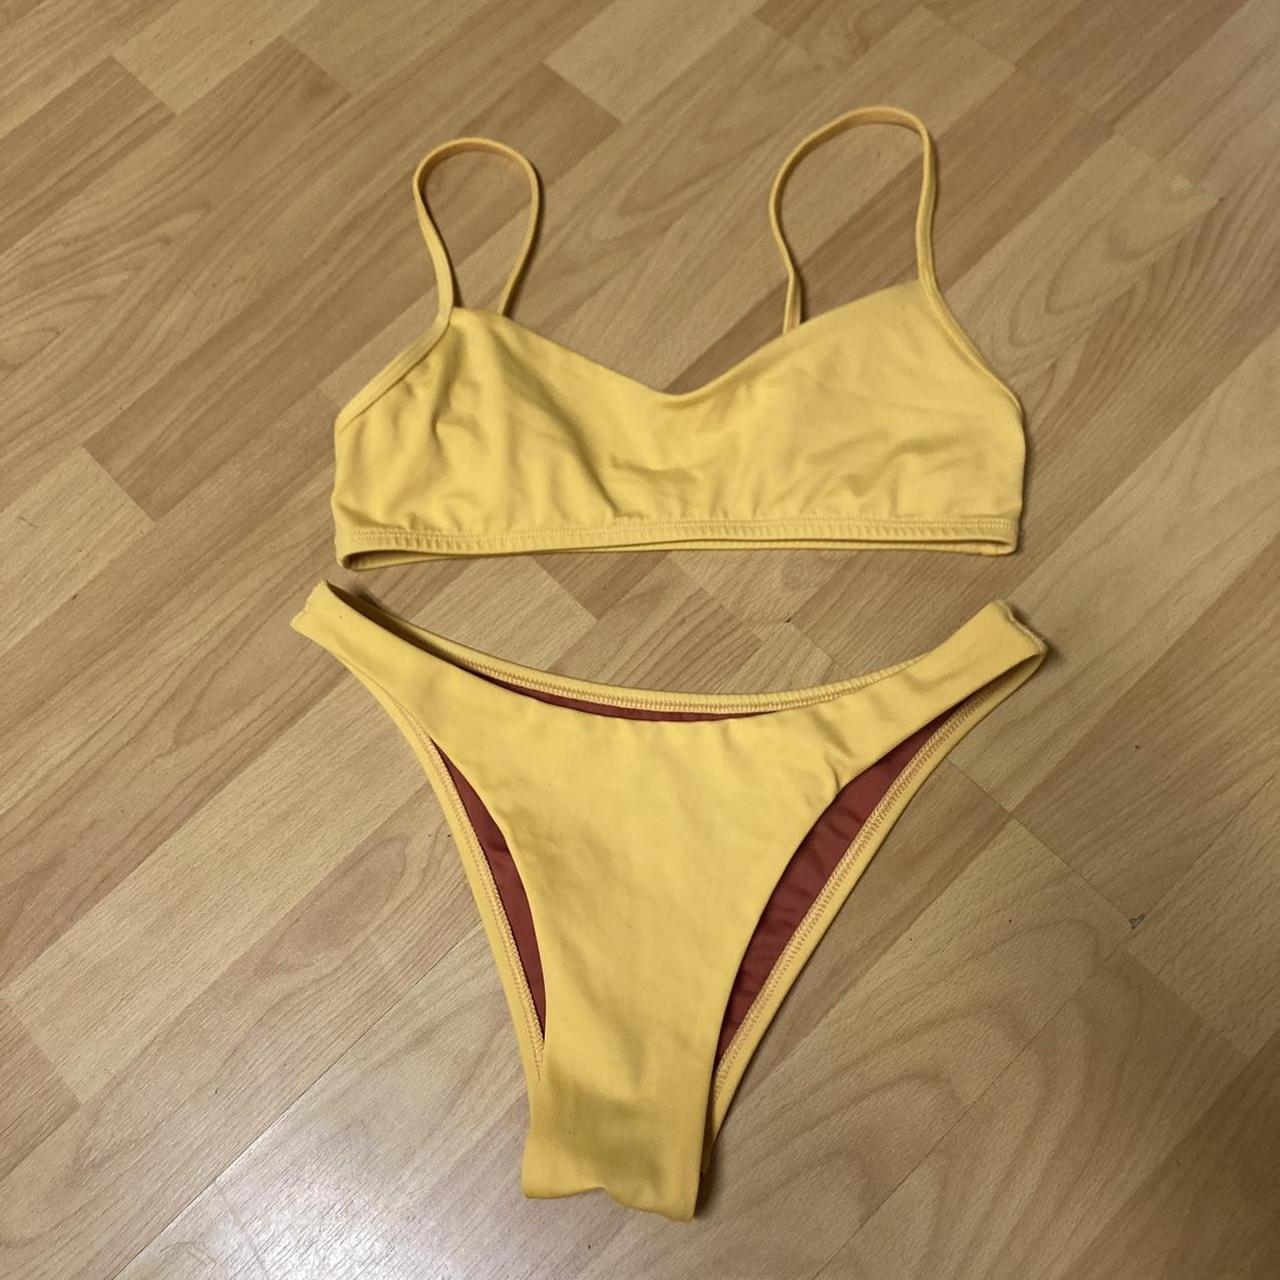 jolyn bikini in color “persimmon” 👙 •perfect... - Depop